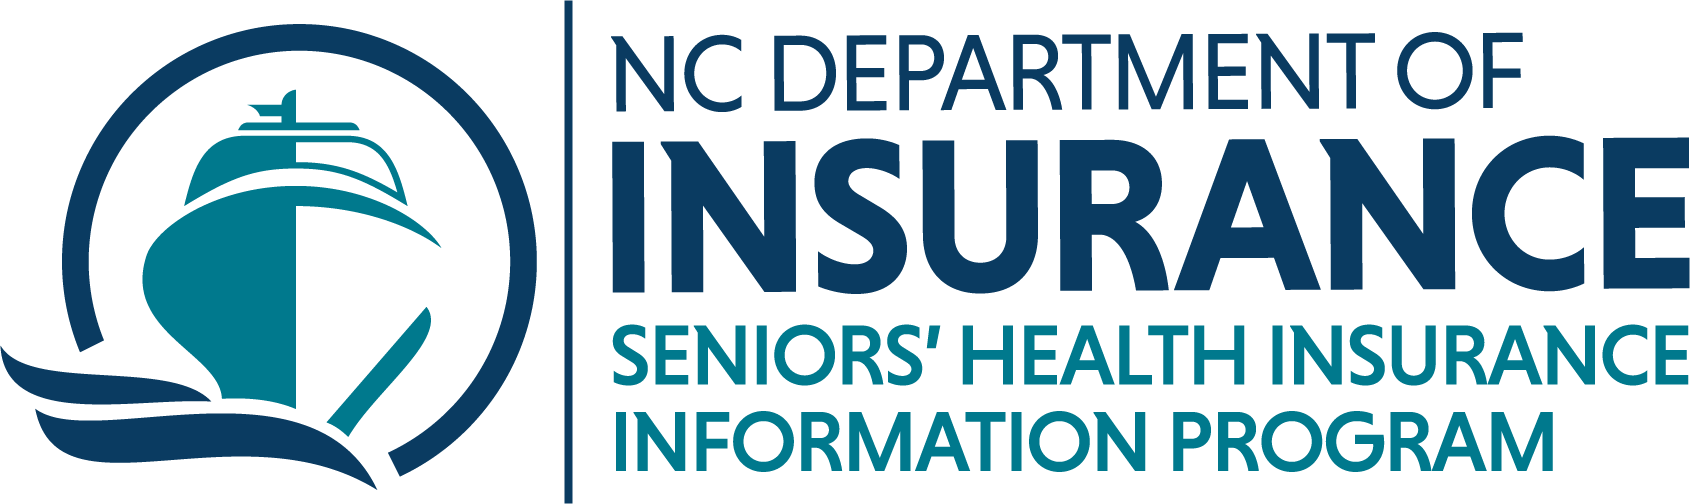 Seniors Health Insurance Information Program